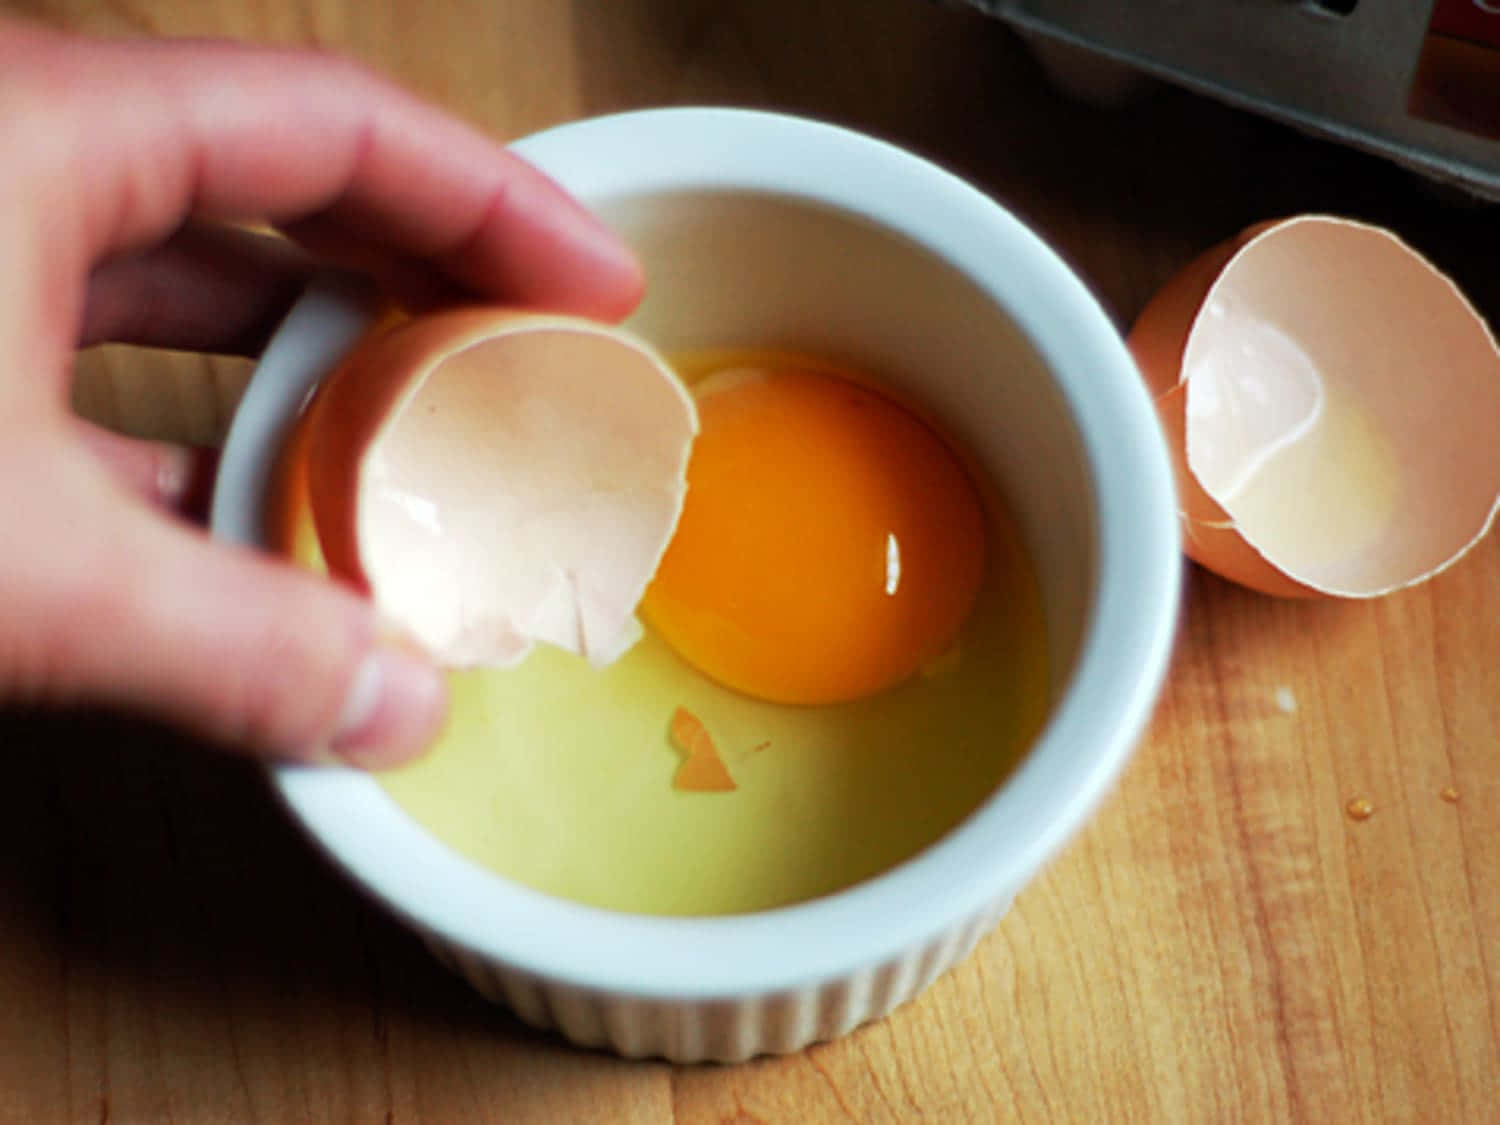 A cracked open eggshell showing a half-peeled yolk Wallpaper